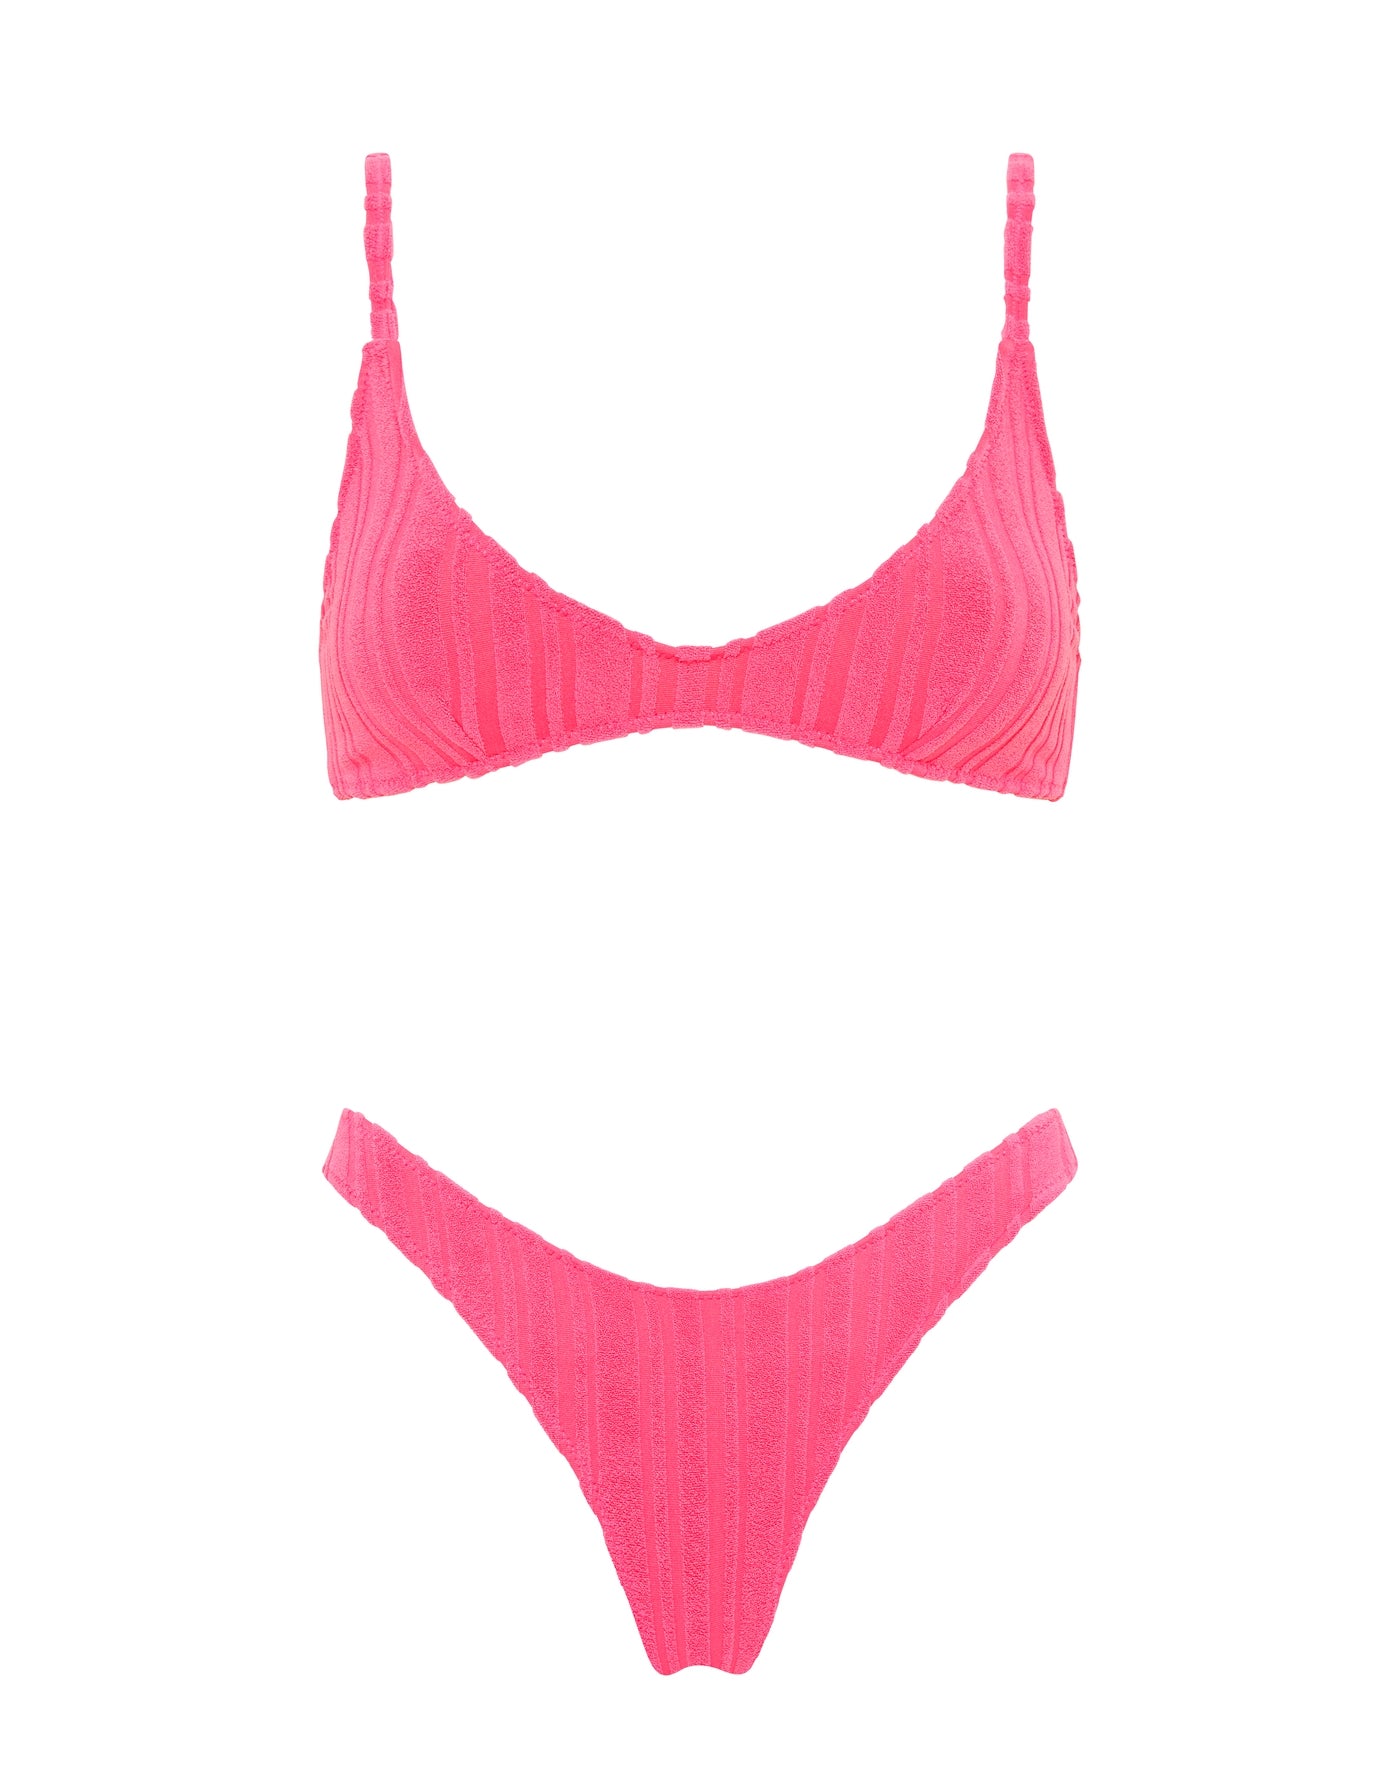 Making Waves Bright Pink Triangle Bikini Top